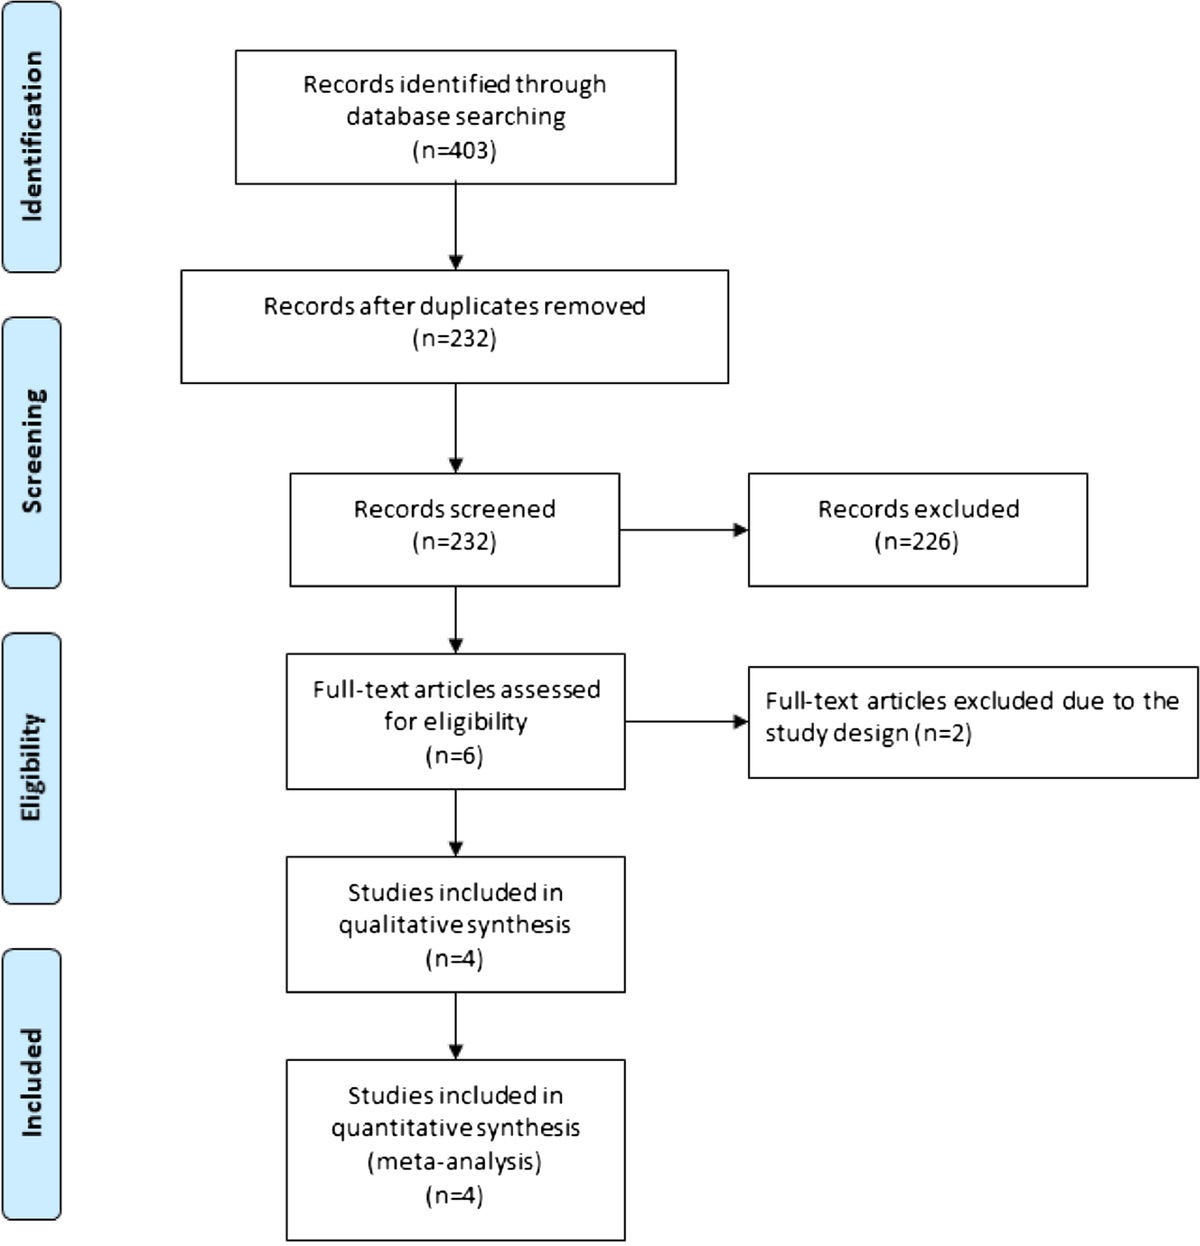 Cilostazol Administration for Subarachnoid Hemorrhage: A Meta-analysis of Randomized Controlled Trials